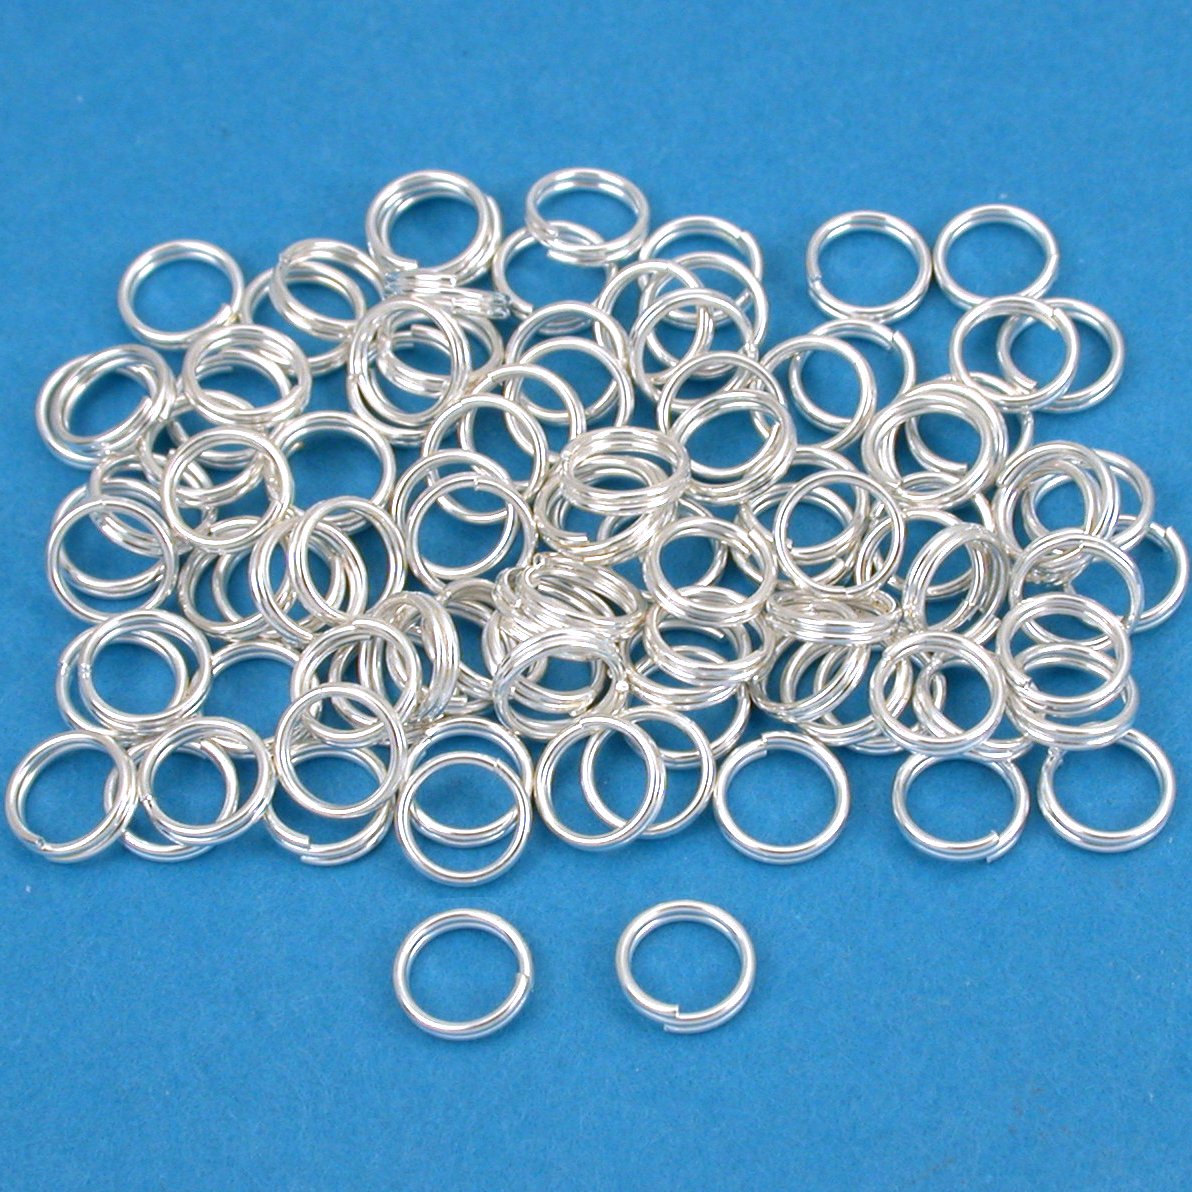 Split Rings Silver Plated 6mm 100Pcs